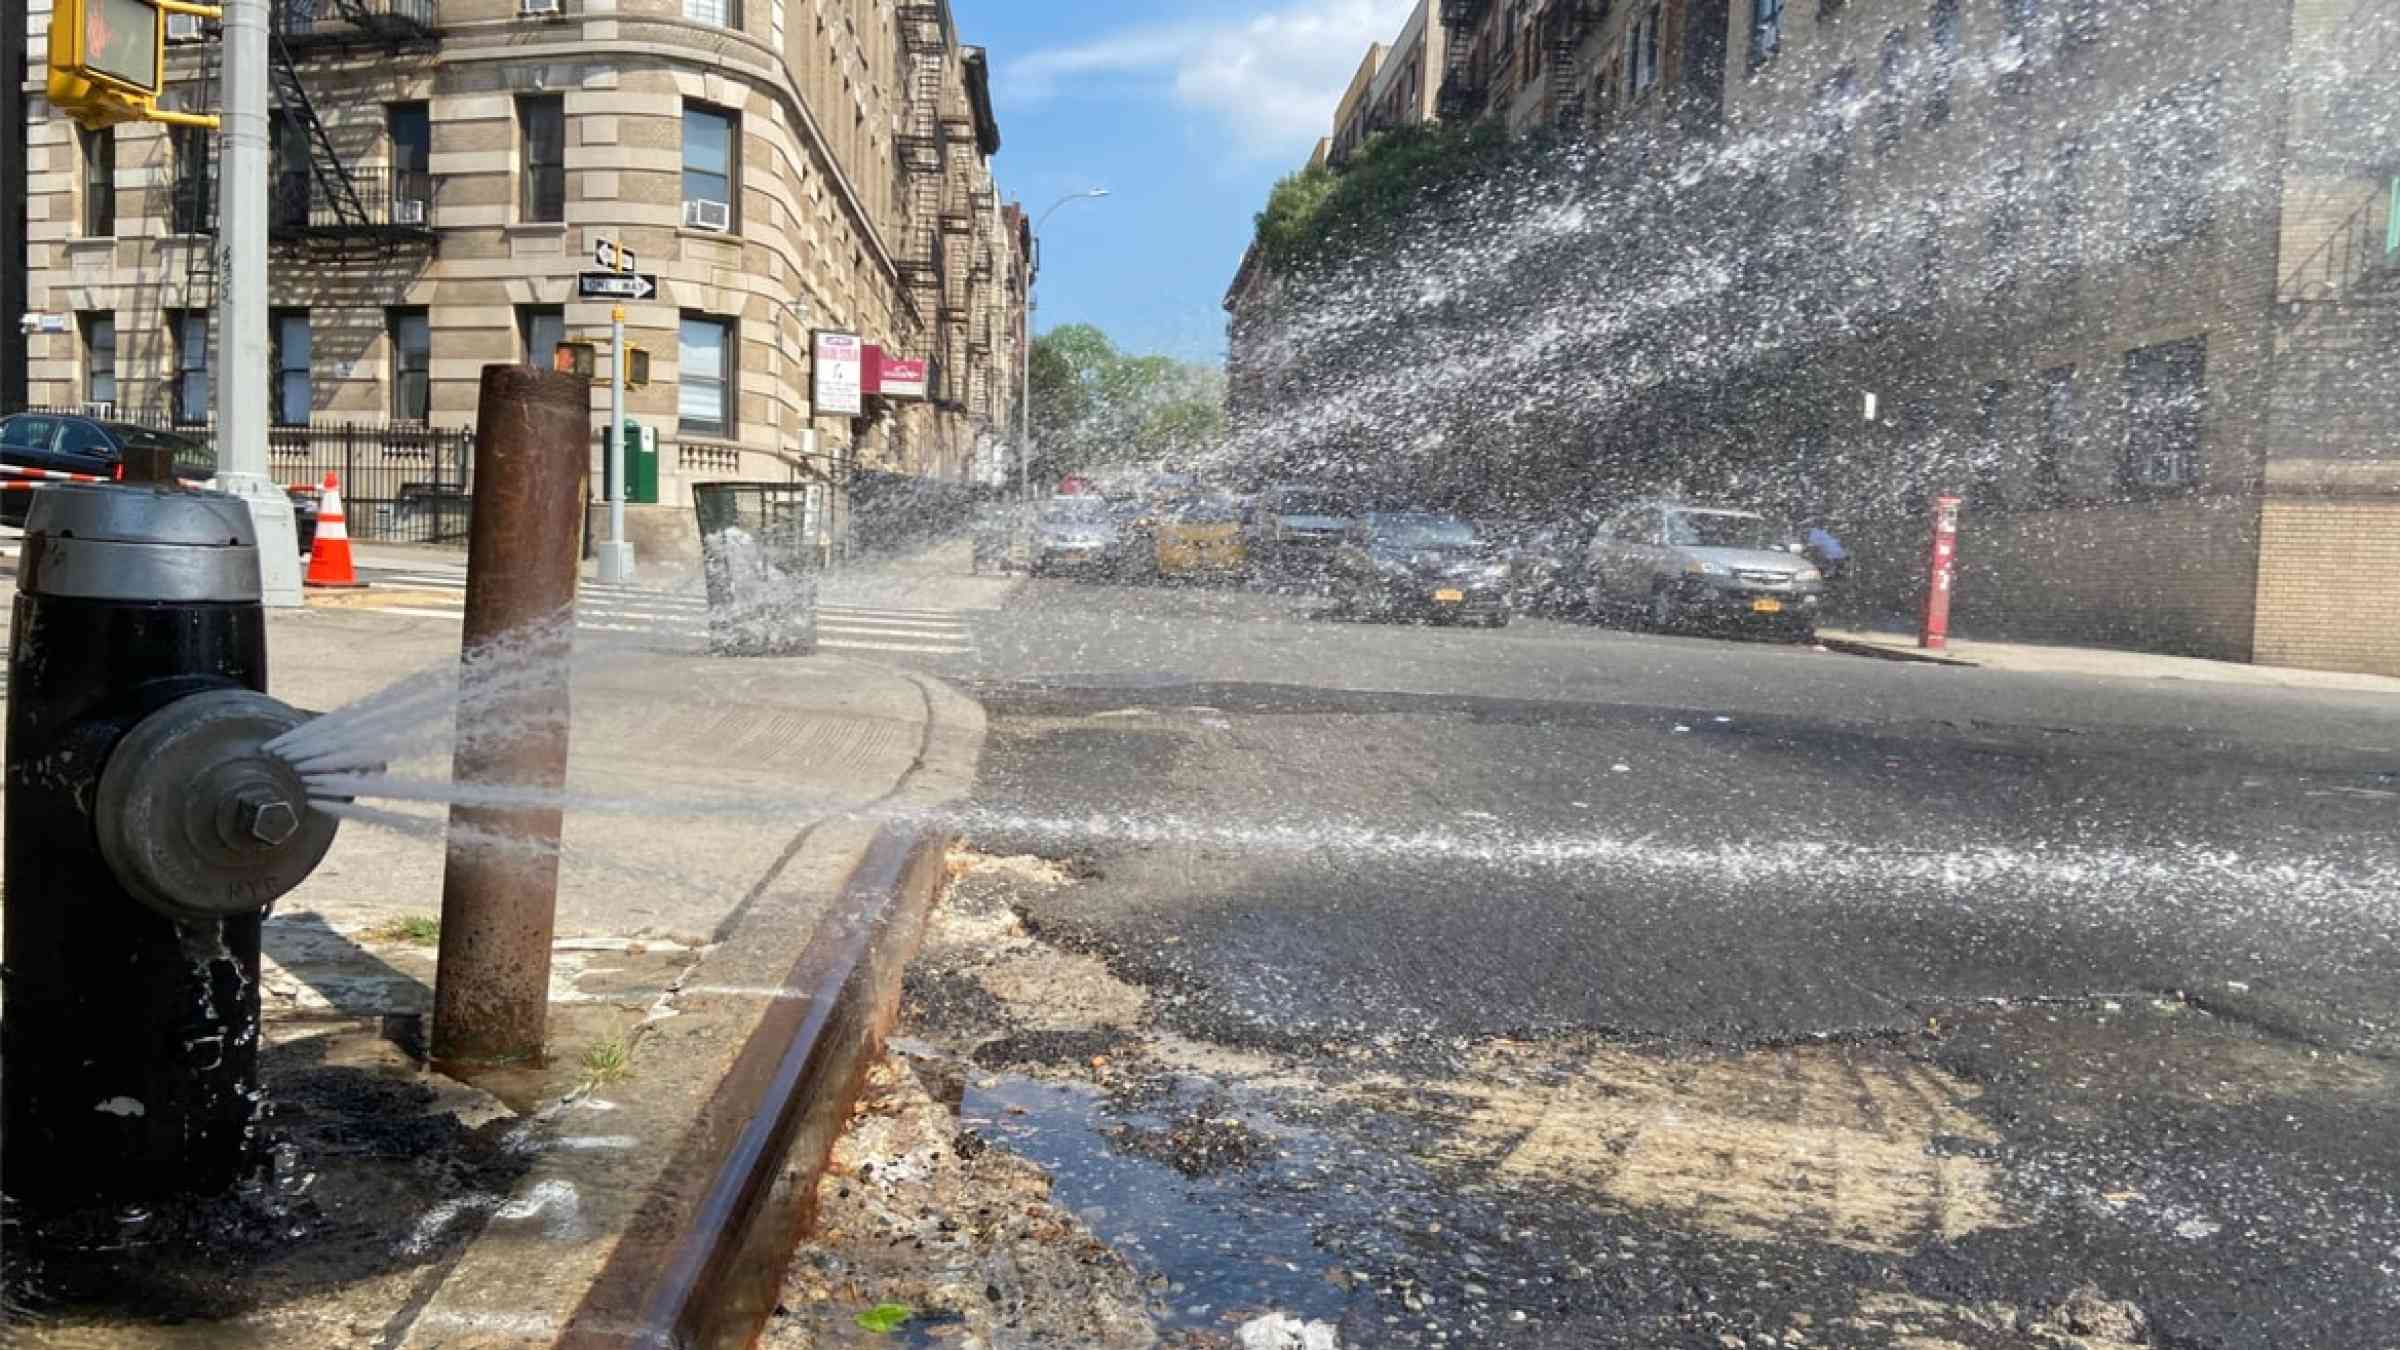 Fire hydrant sprays water in a New York City street